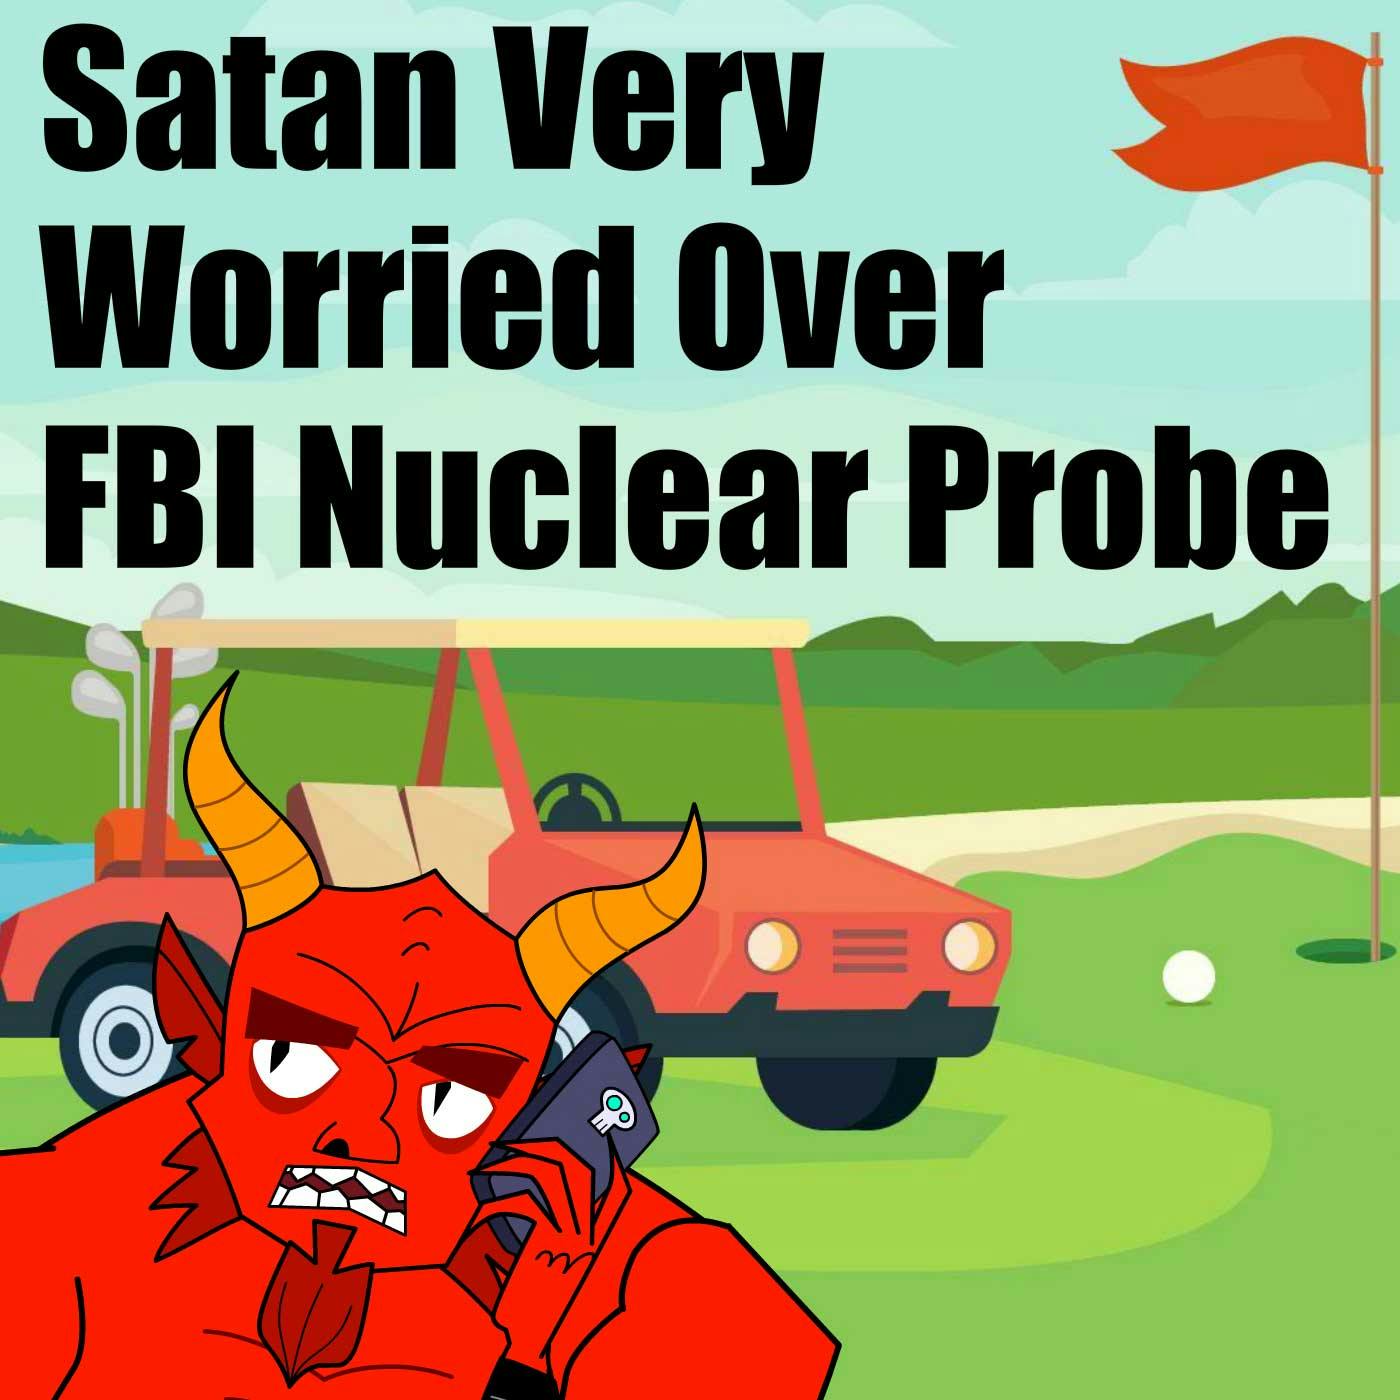 Satan Very Worried Over FBI Nuclear Probe